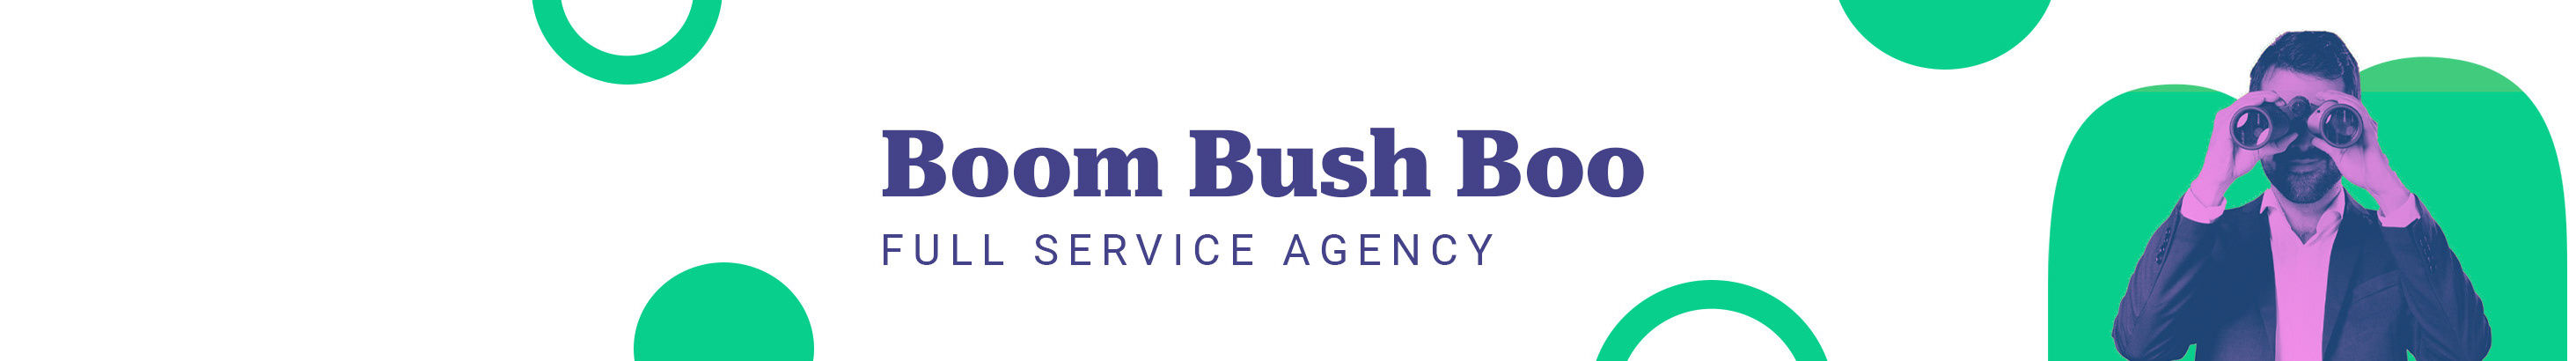 Boom Bush Boo marketing agency's profile banner